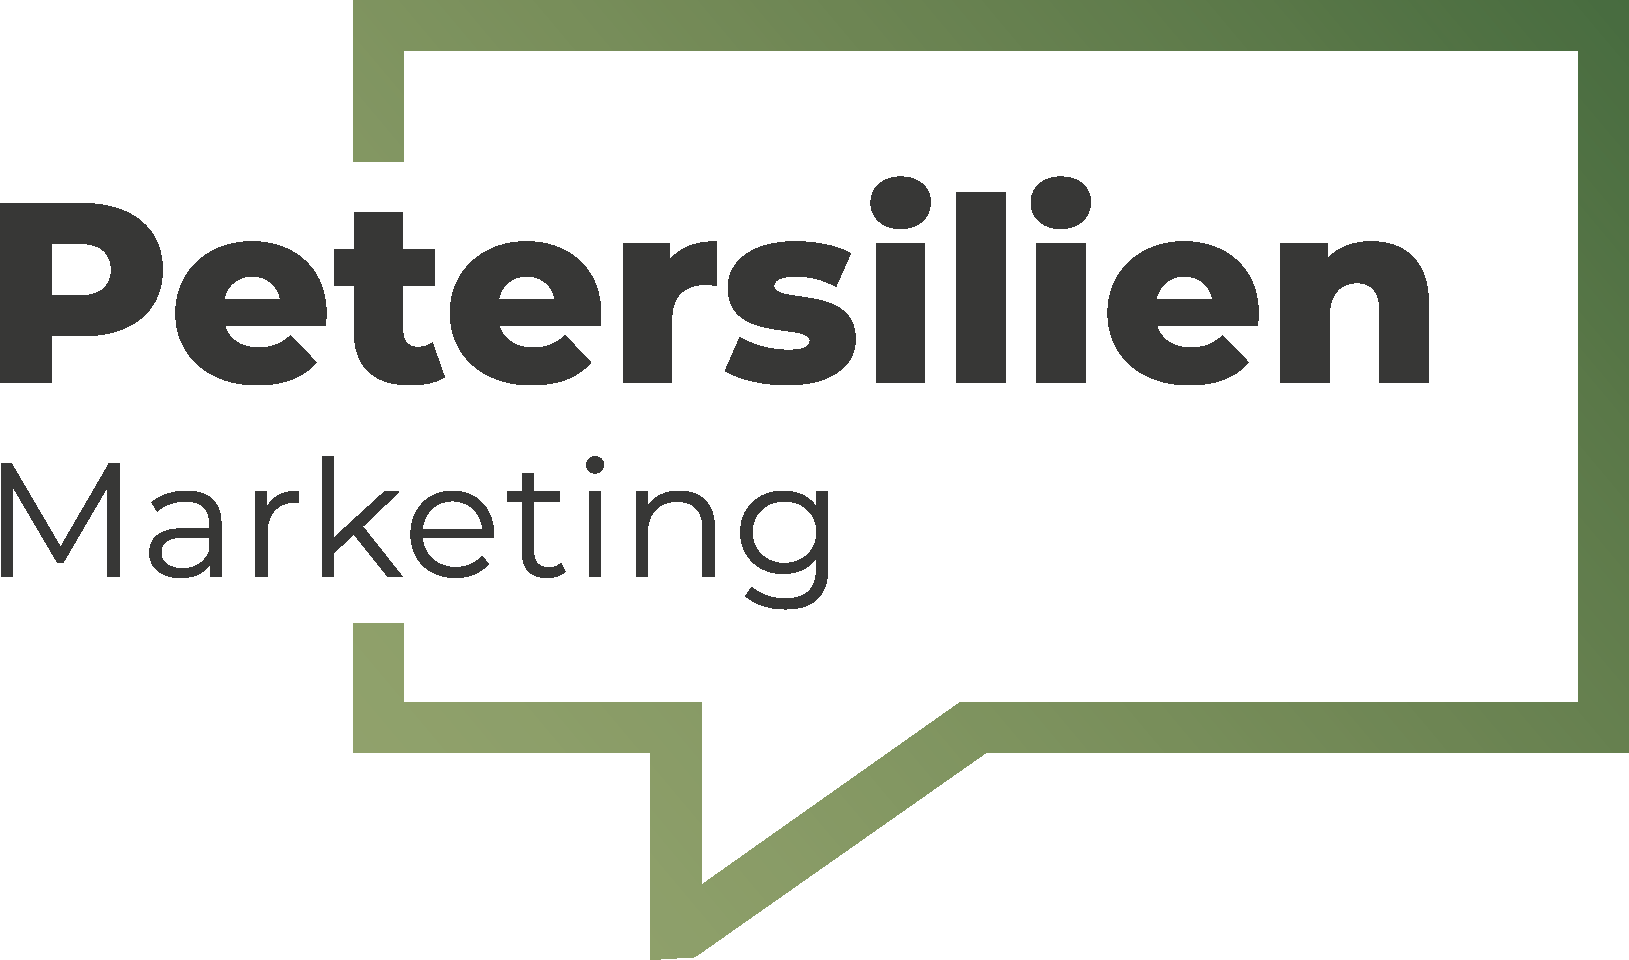 Petersilien Marketing - Torben Dill